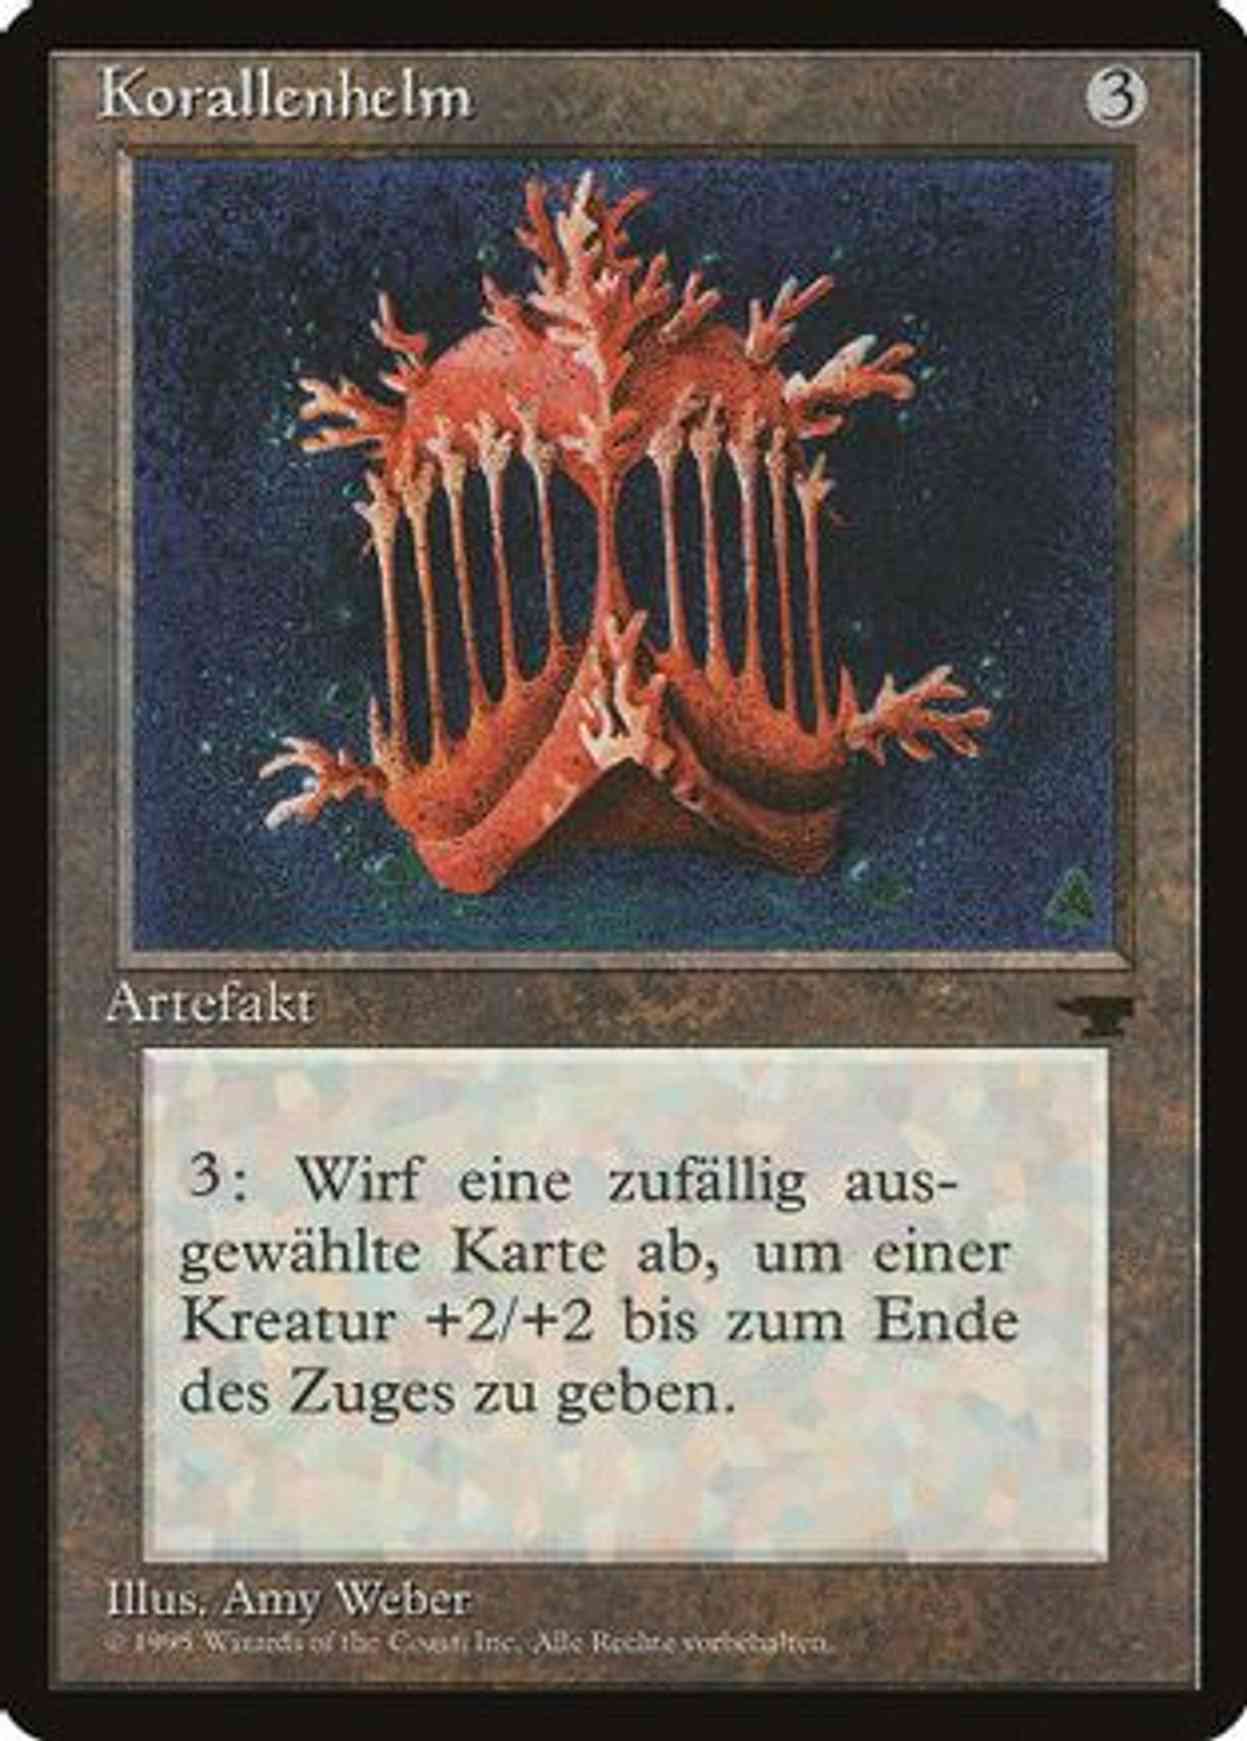 Coral Helm (German) - "Korallenhelm" magic card front